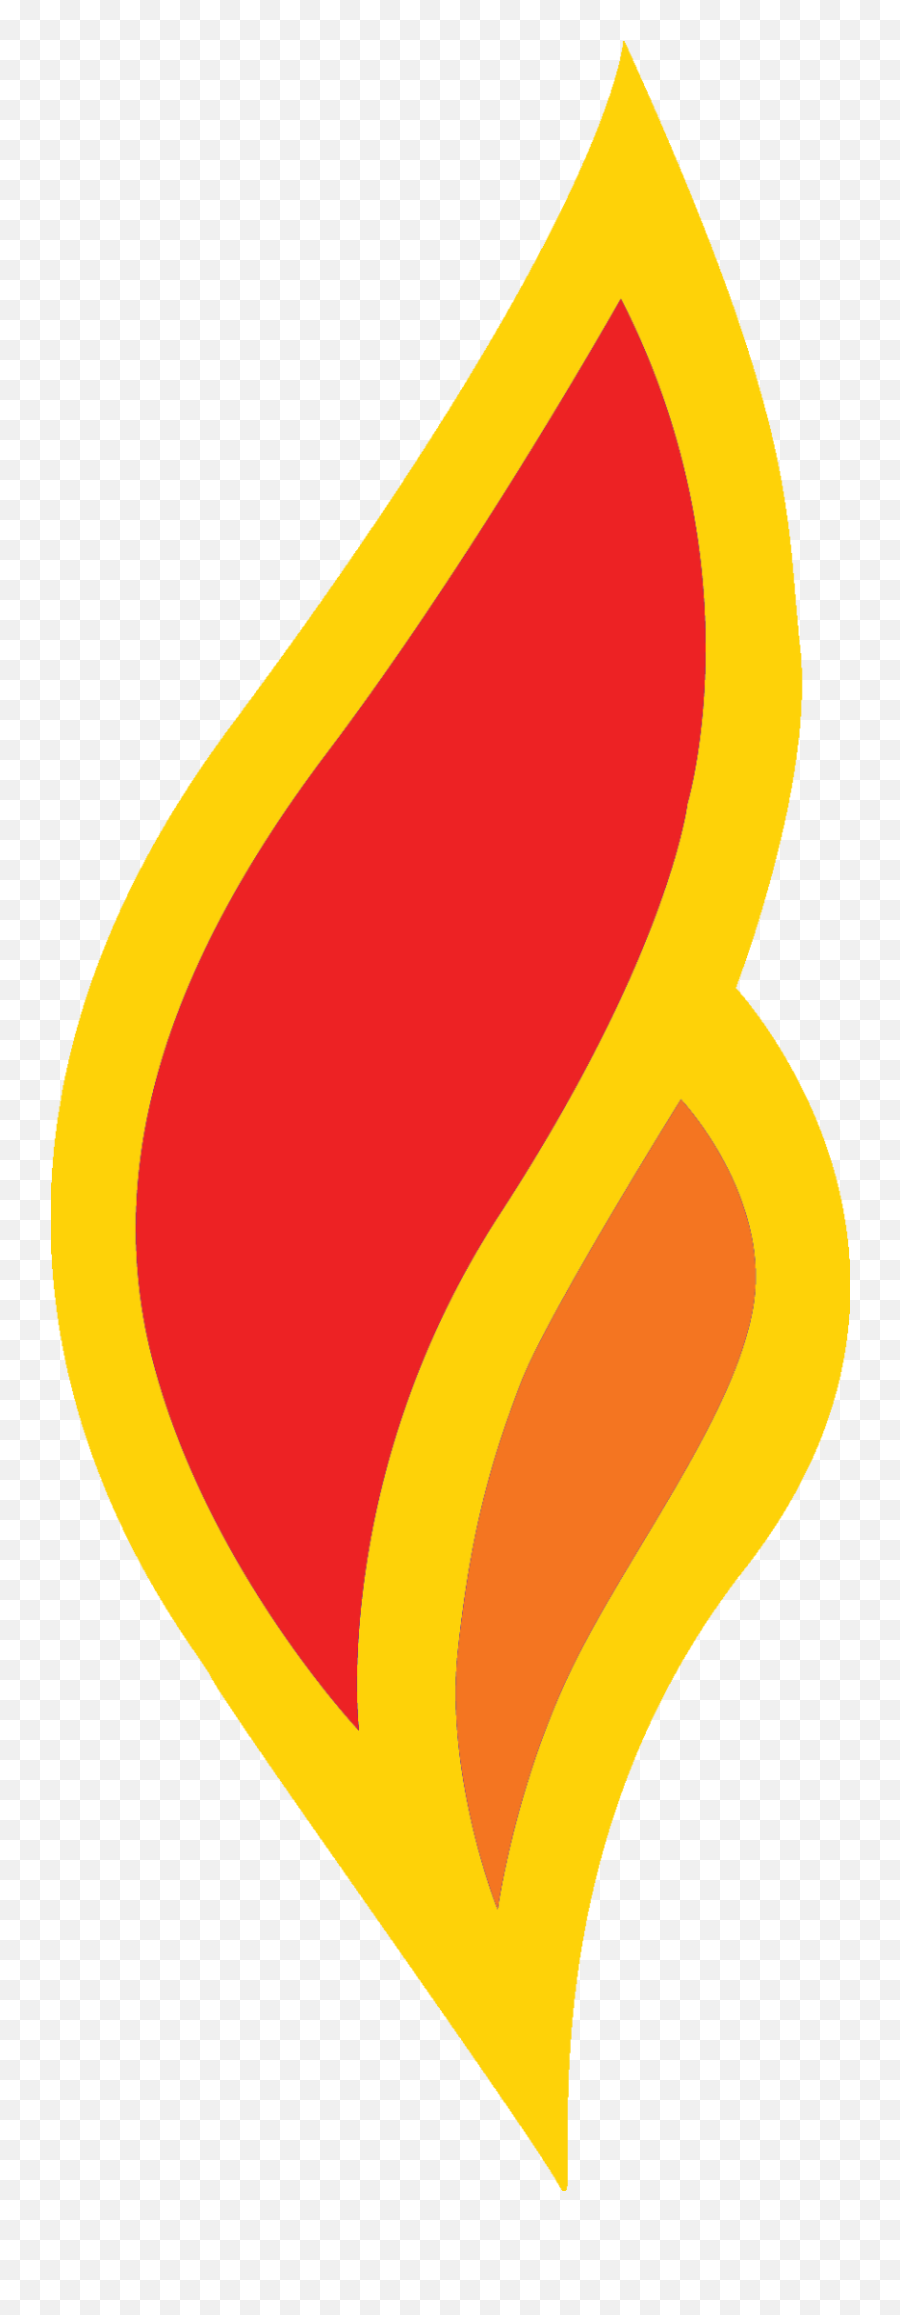 Lemon No Fire Or Flames Allowed Clip Art Free Vector Image 9 - Color Gradient Emoji,Flames Emoji